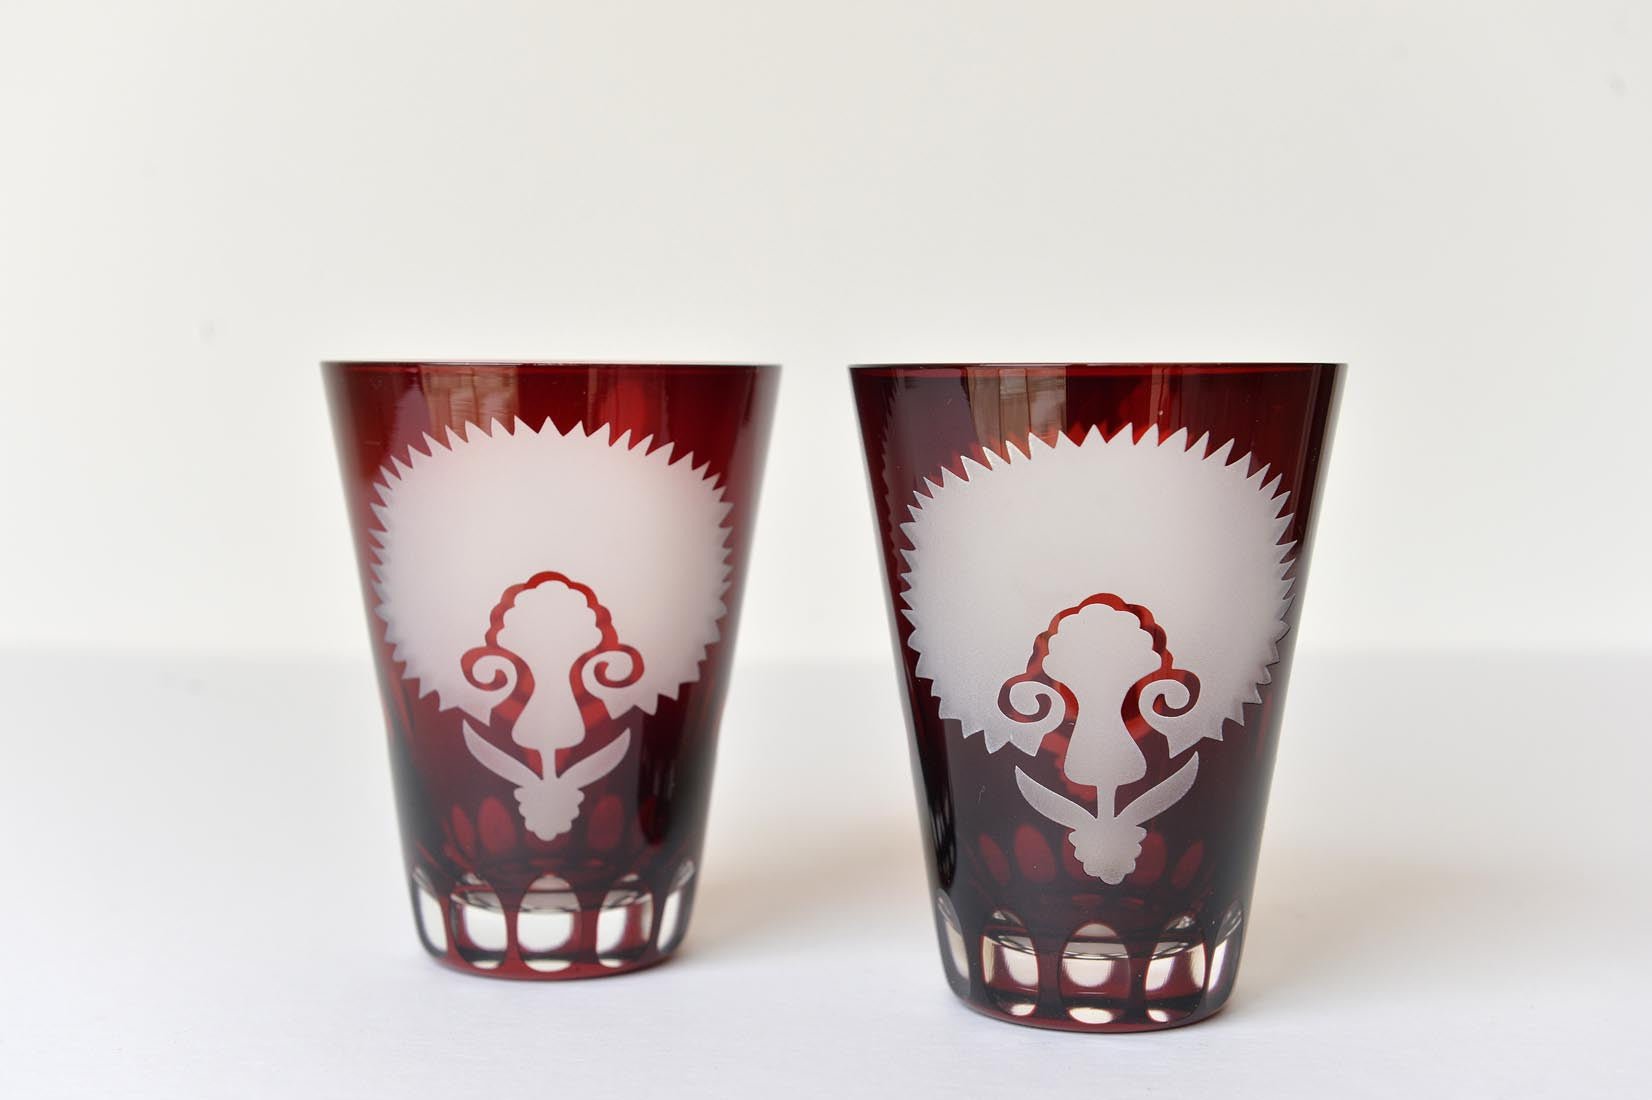 Pair of cut glass glasses with an Ottoman design - Natalia Willmott